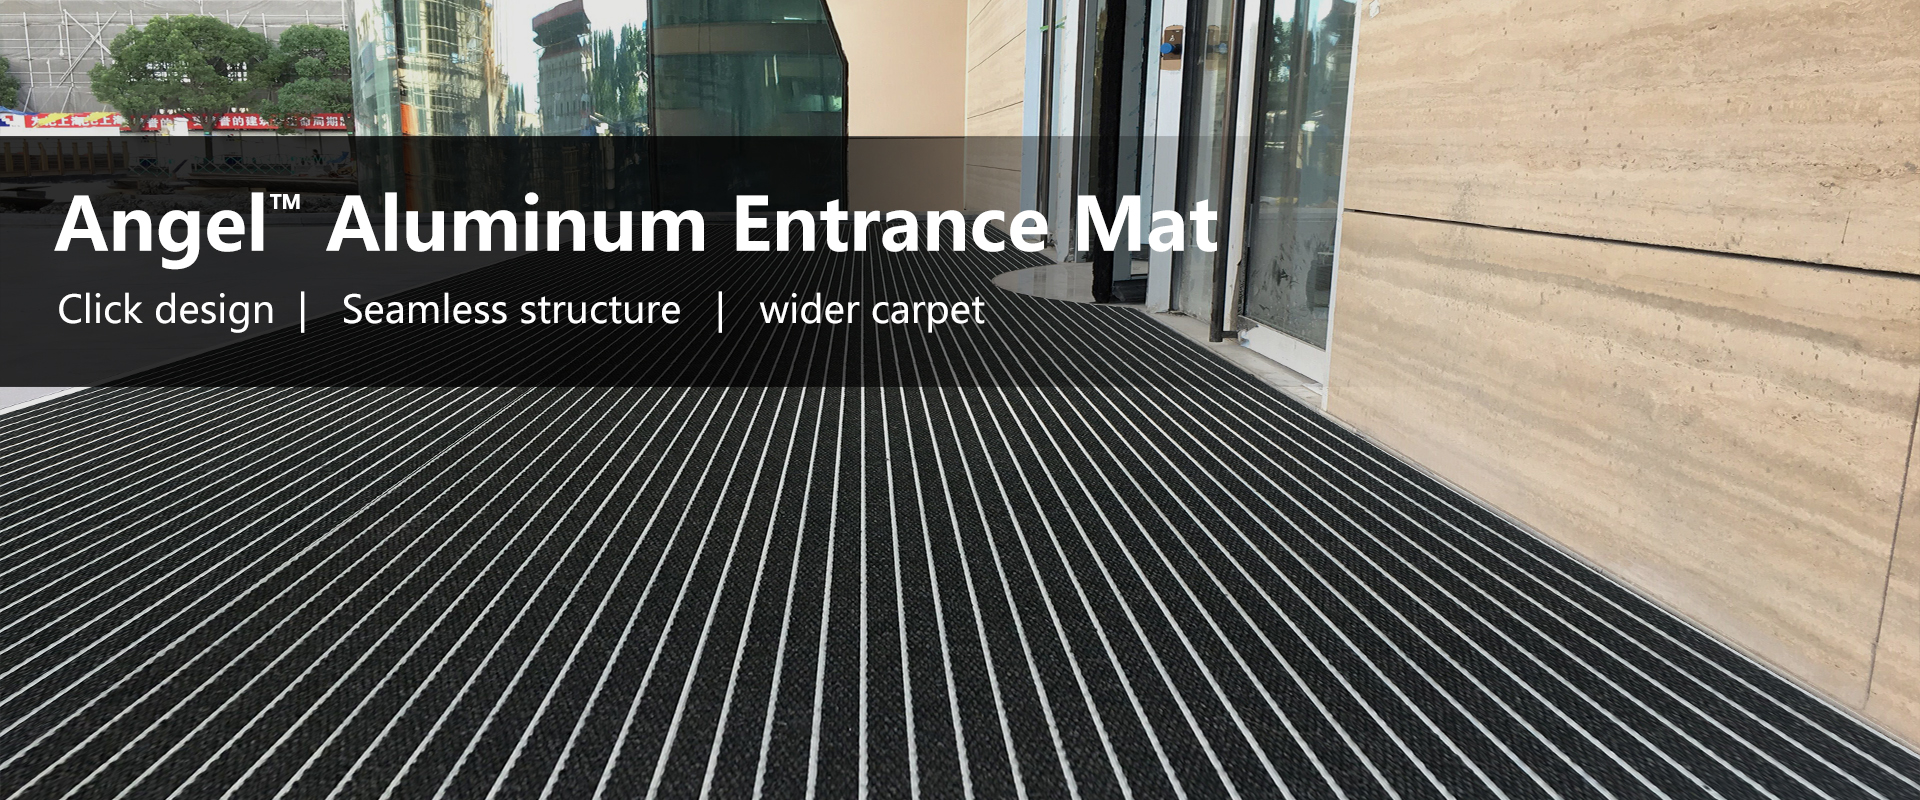 Aluminum Entrance Mat